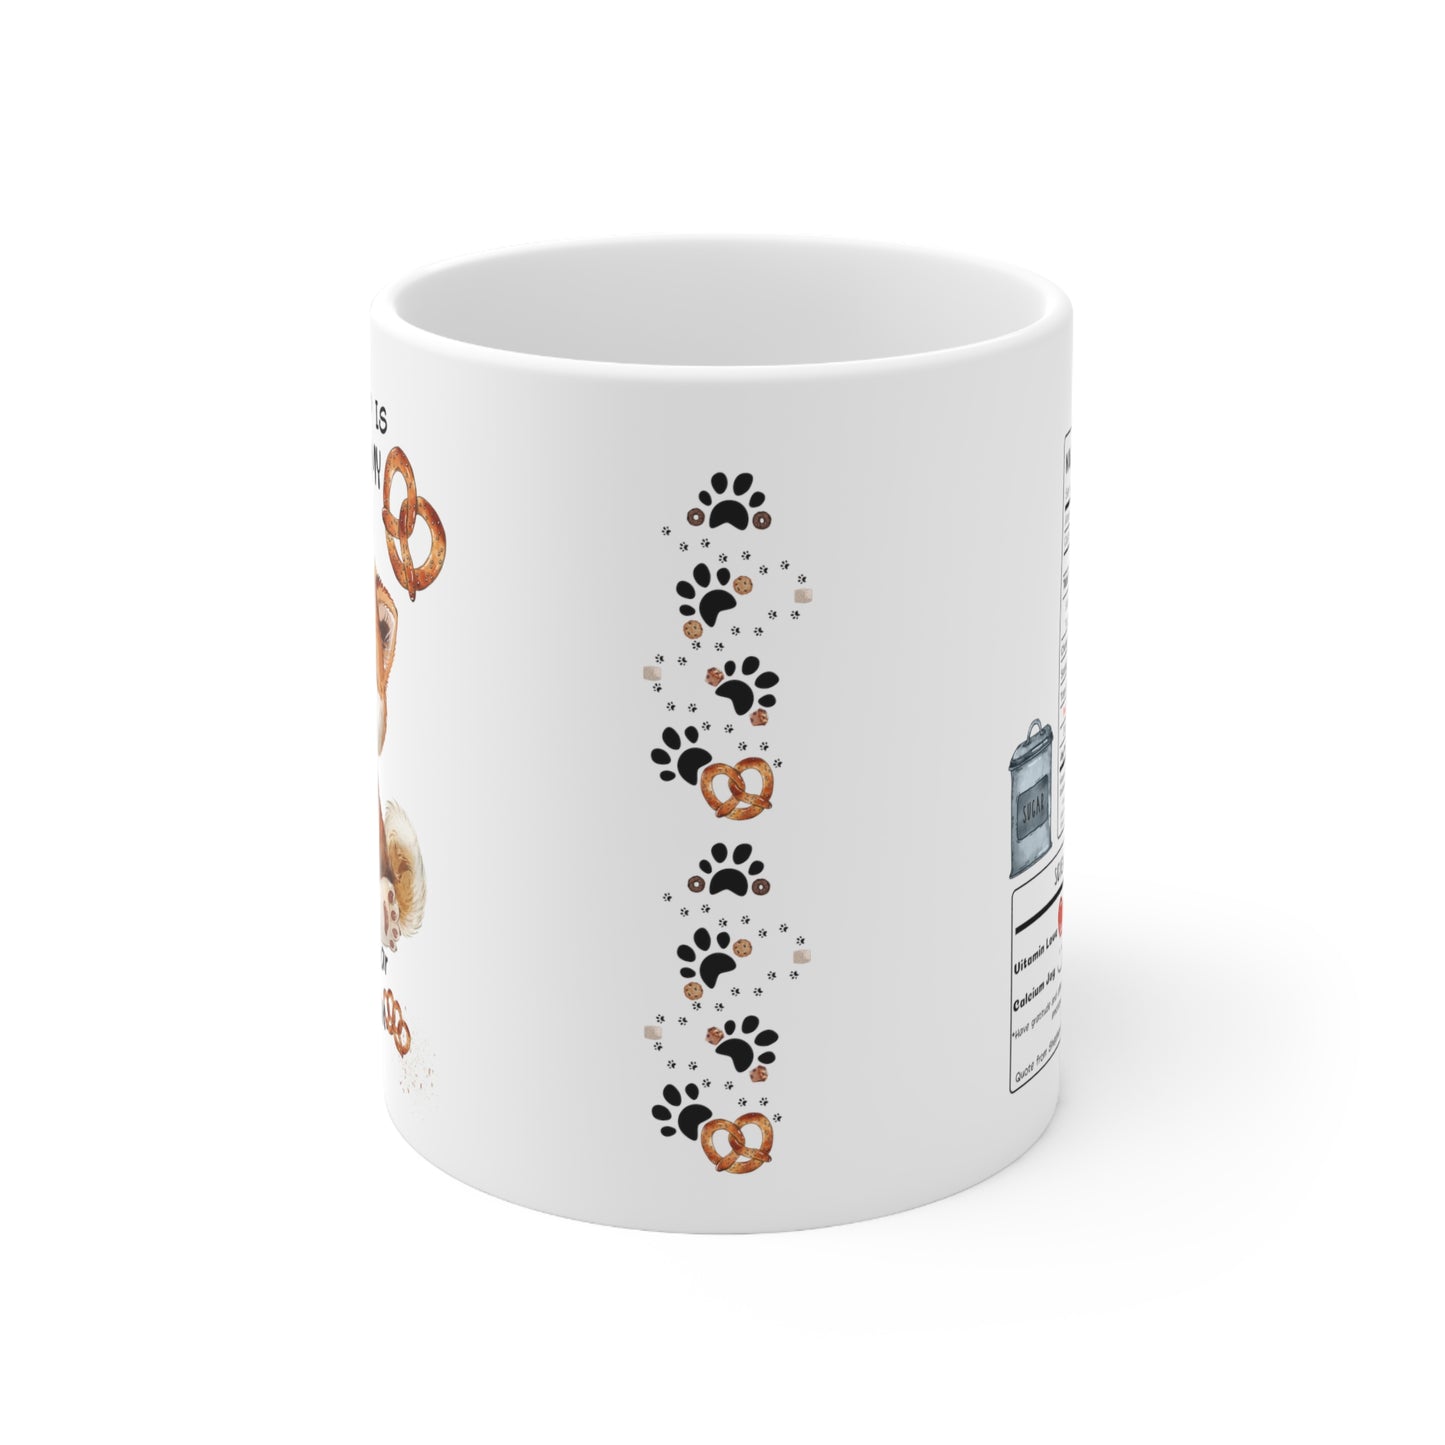 All i need is coffee and my dog - Akitalnu Ceramic Pretzel Mug 11oz